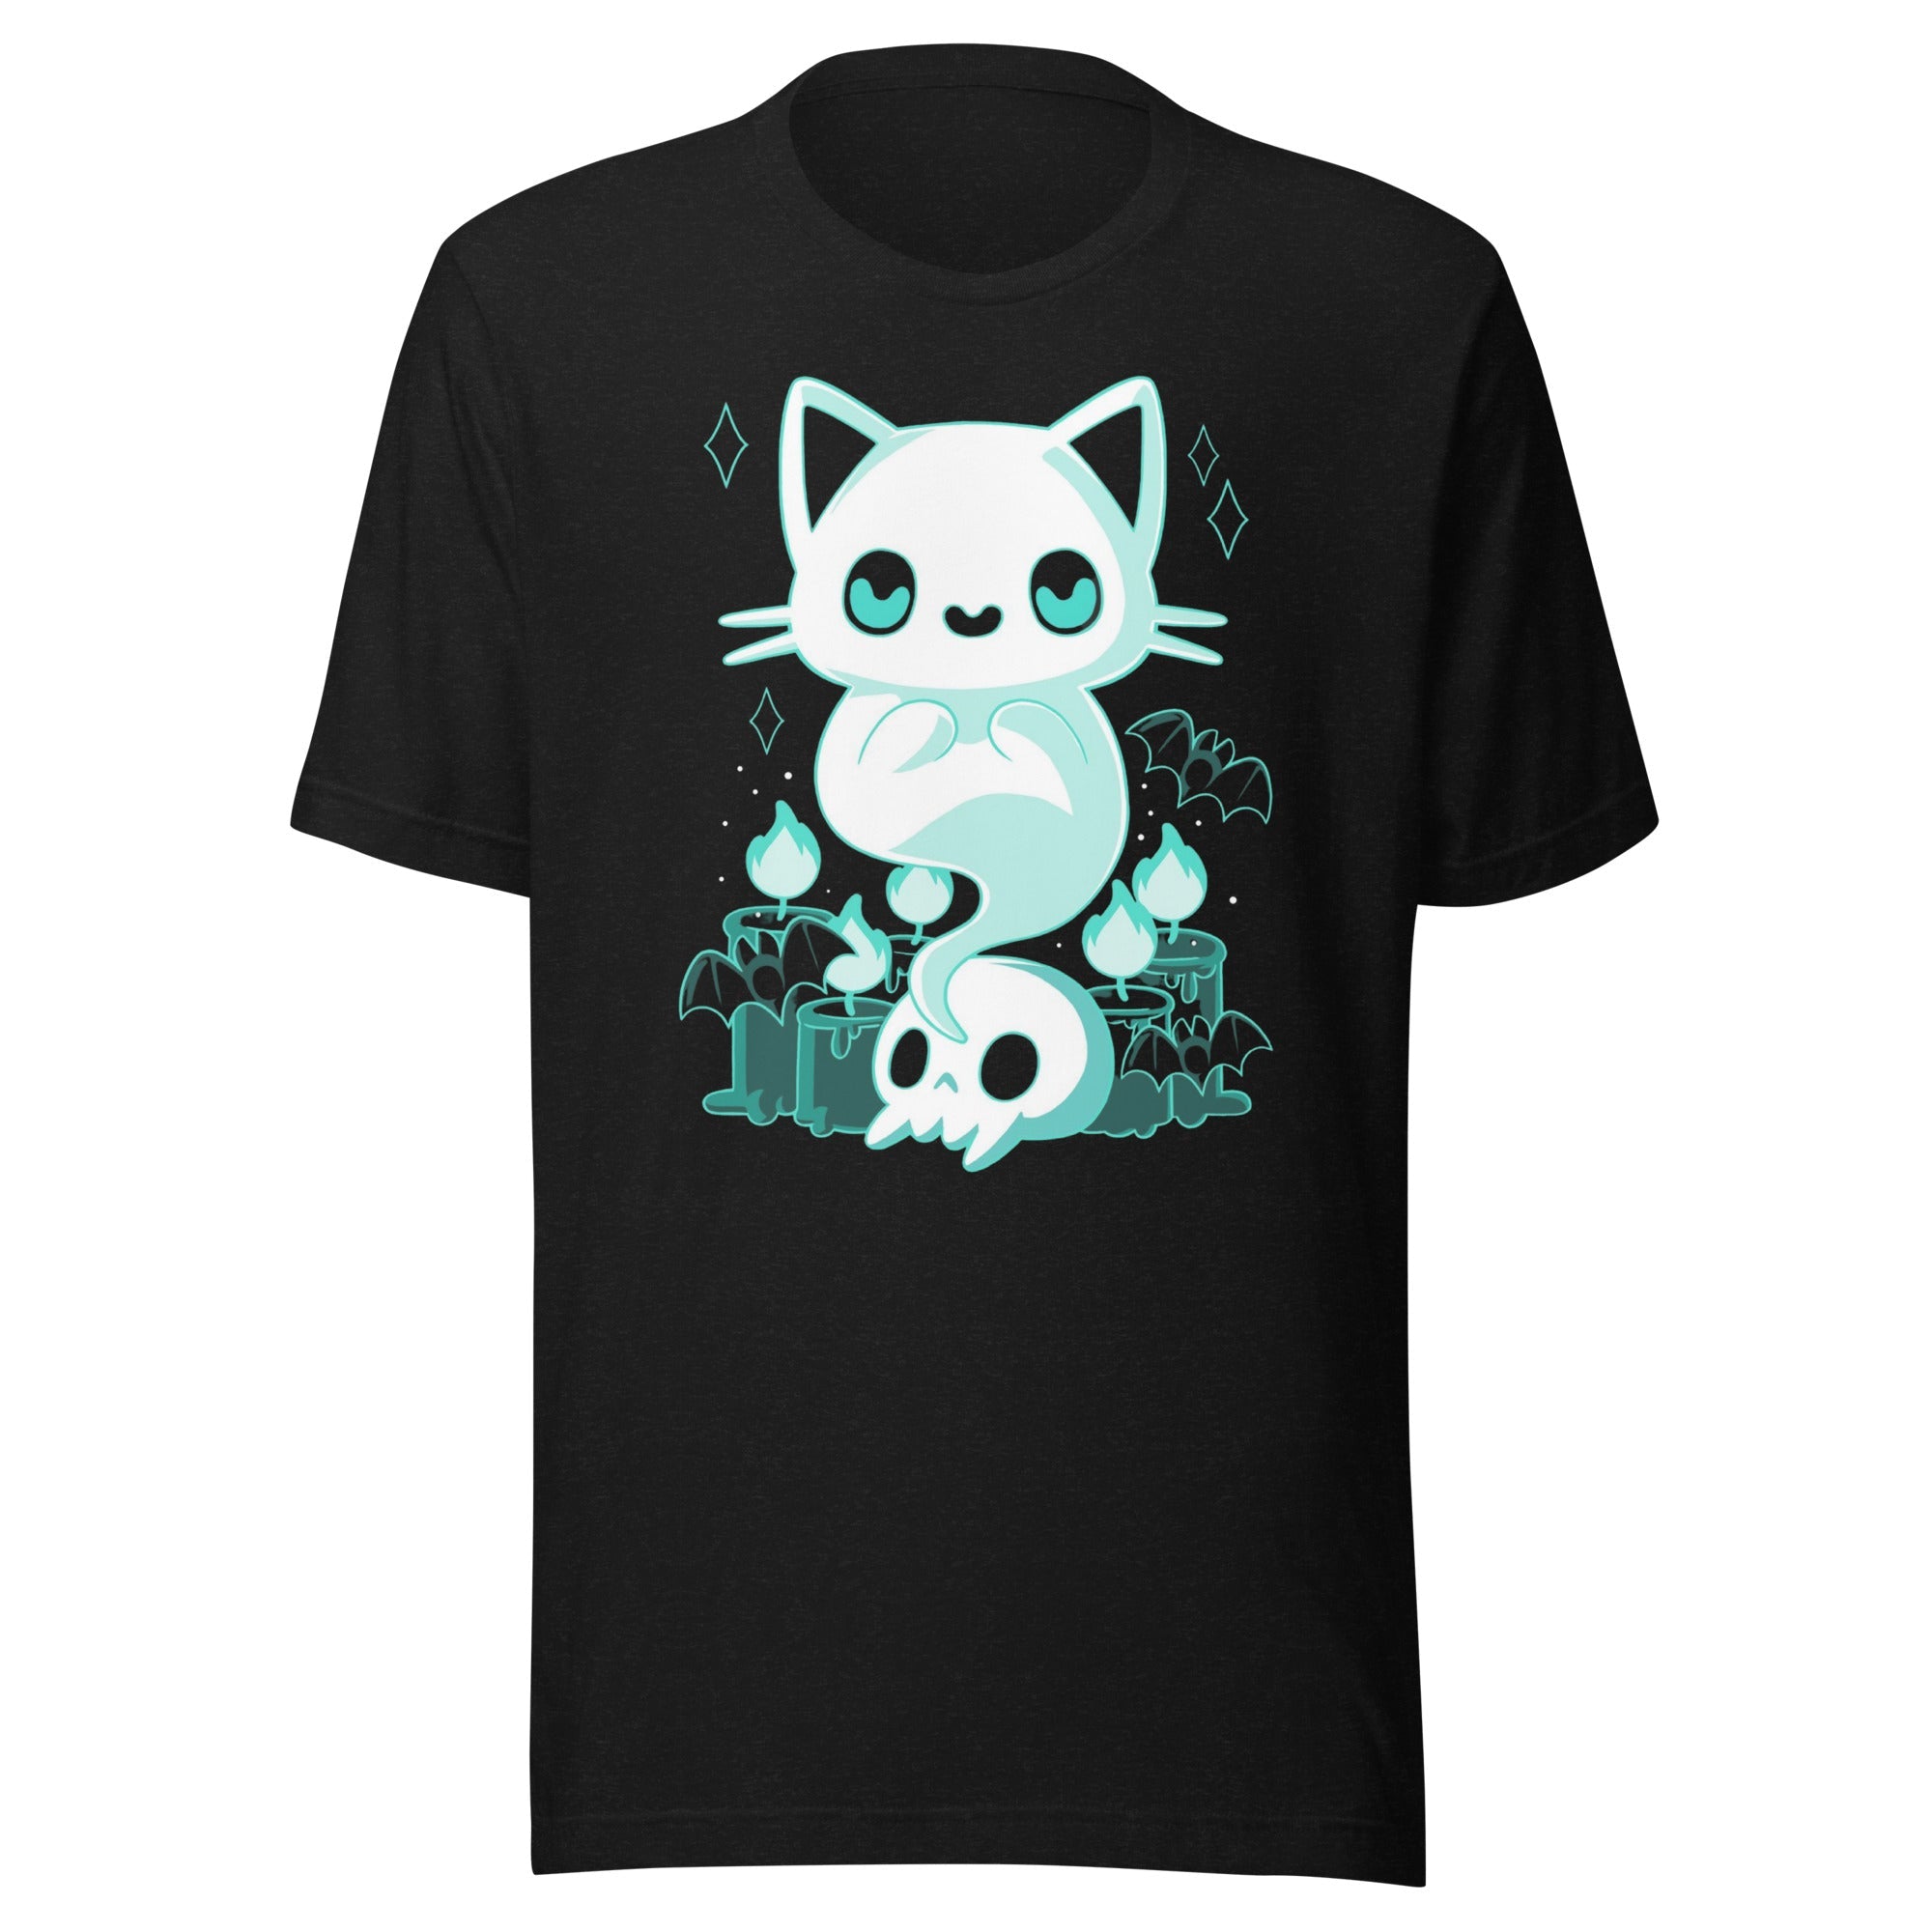 Cats Ghost shirt